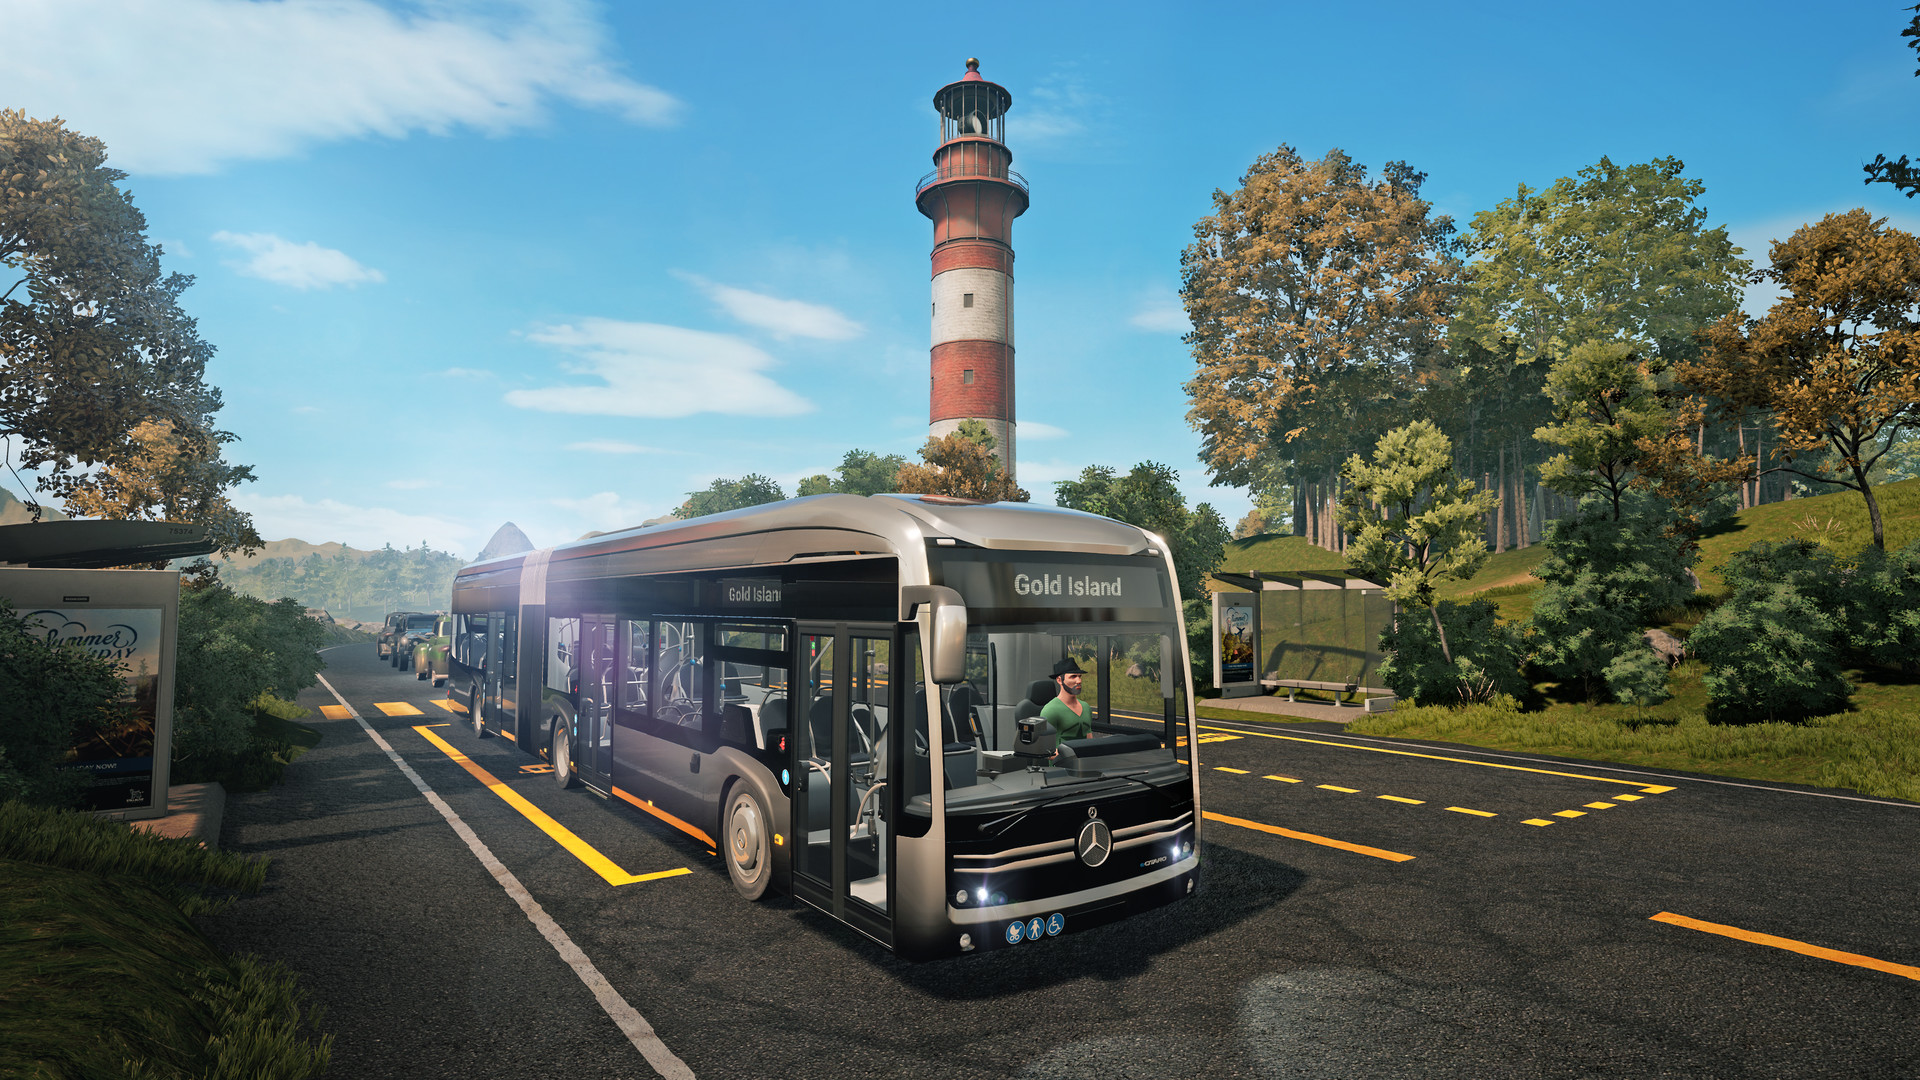 Bus Simulator 21 Extended Edition EU Steam CD Key